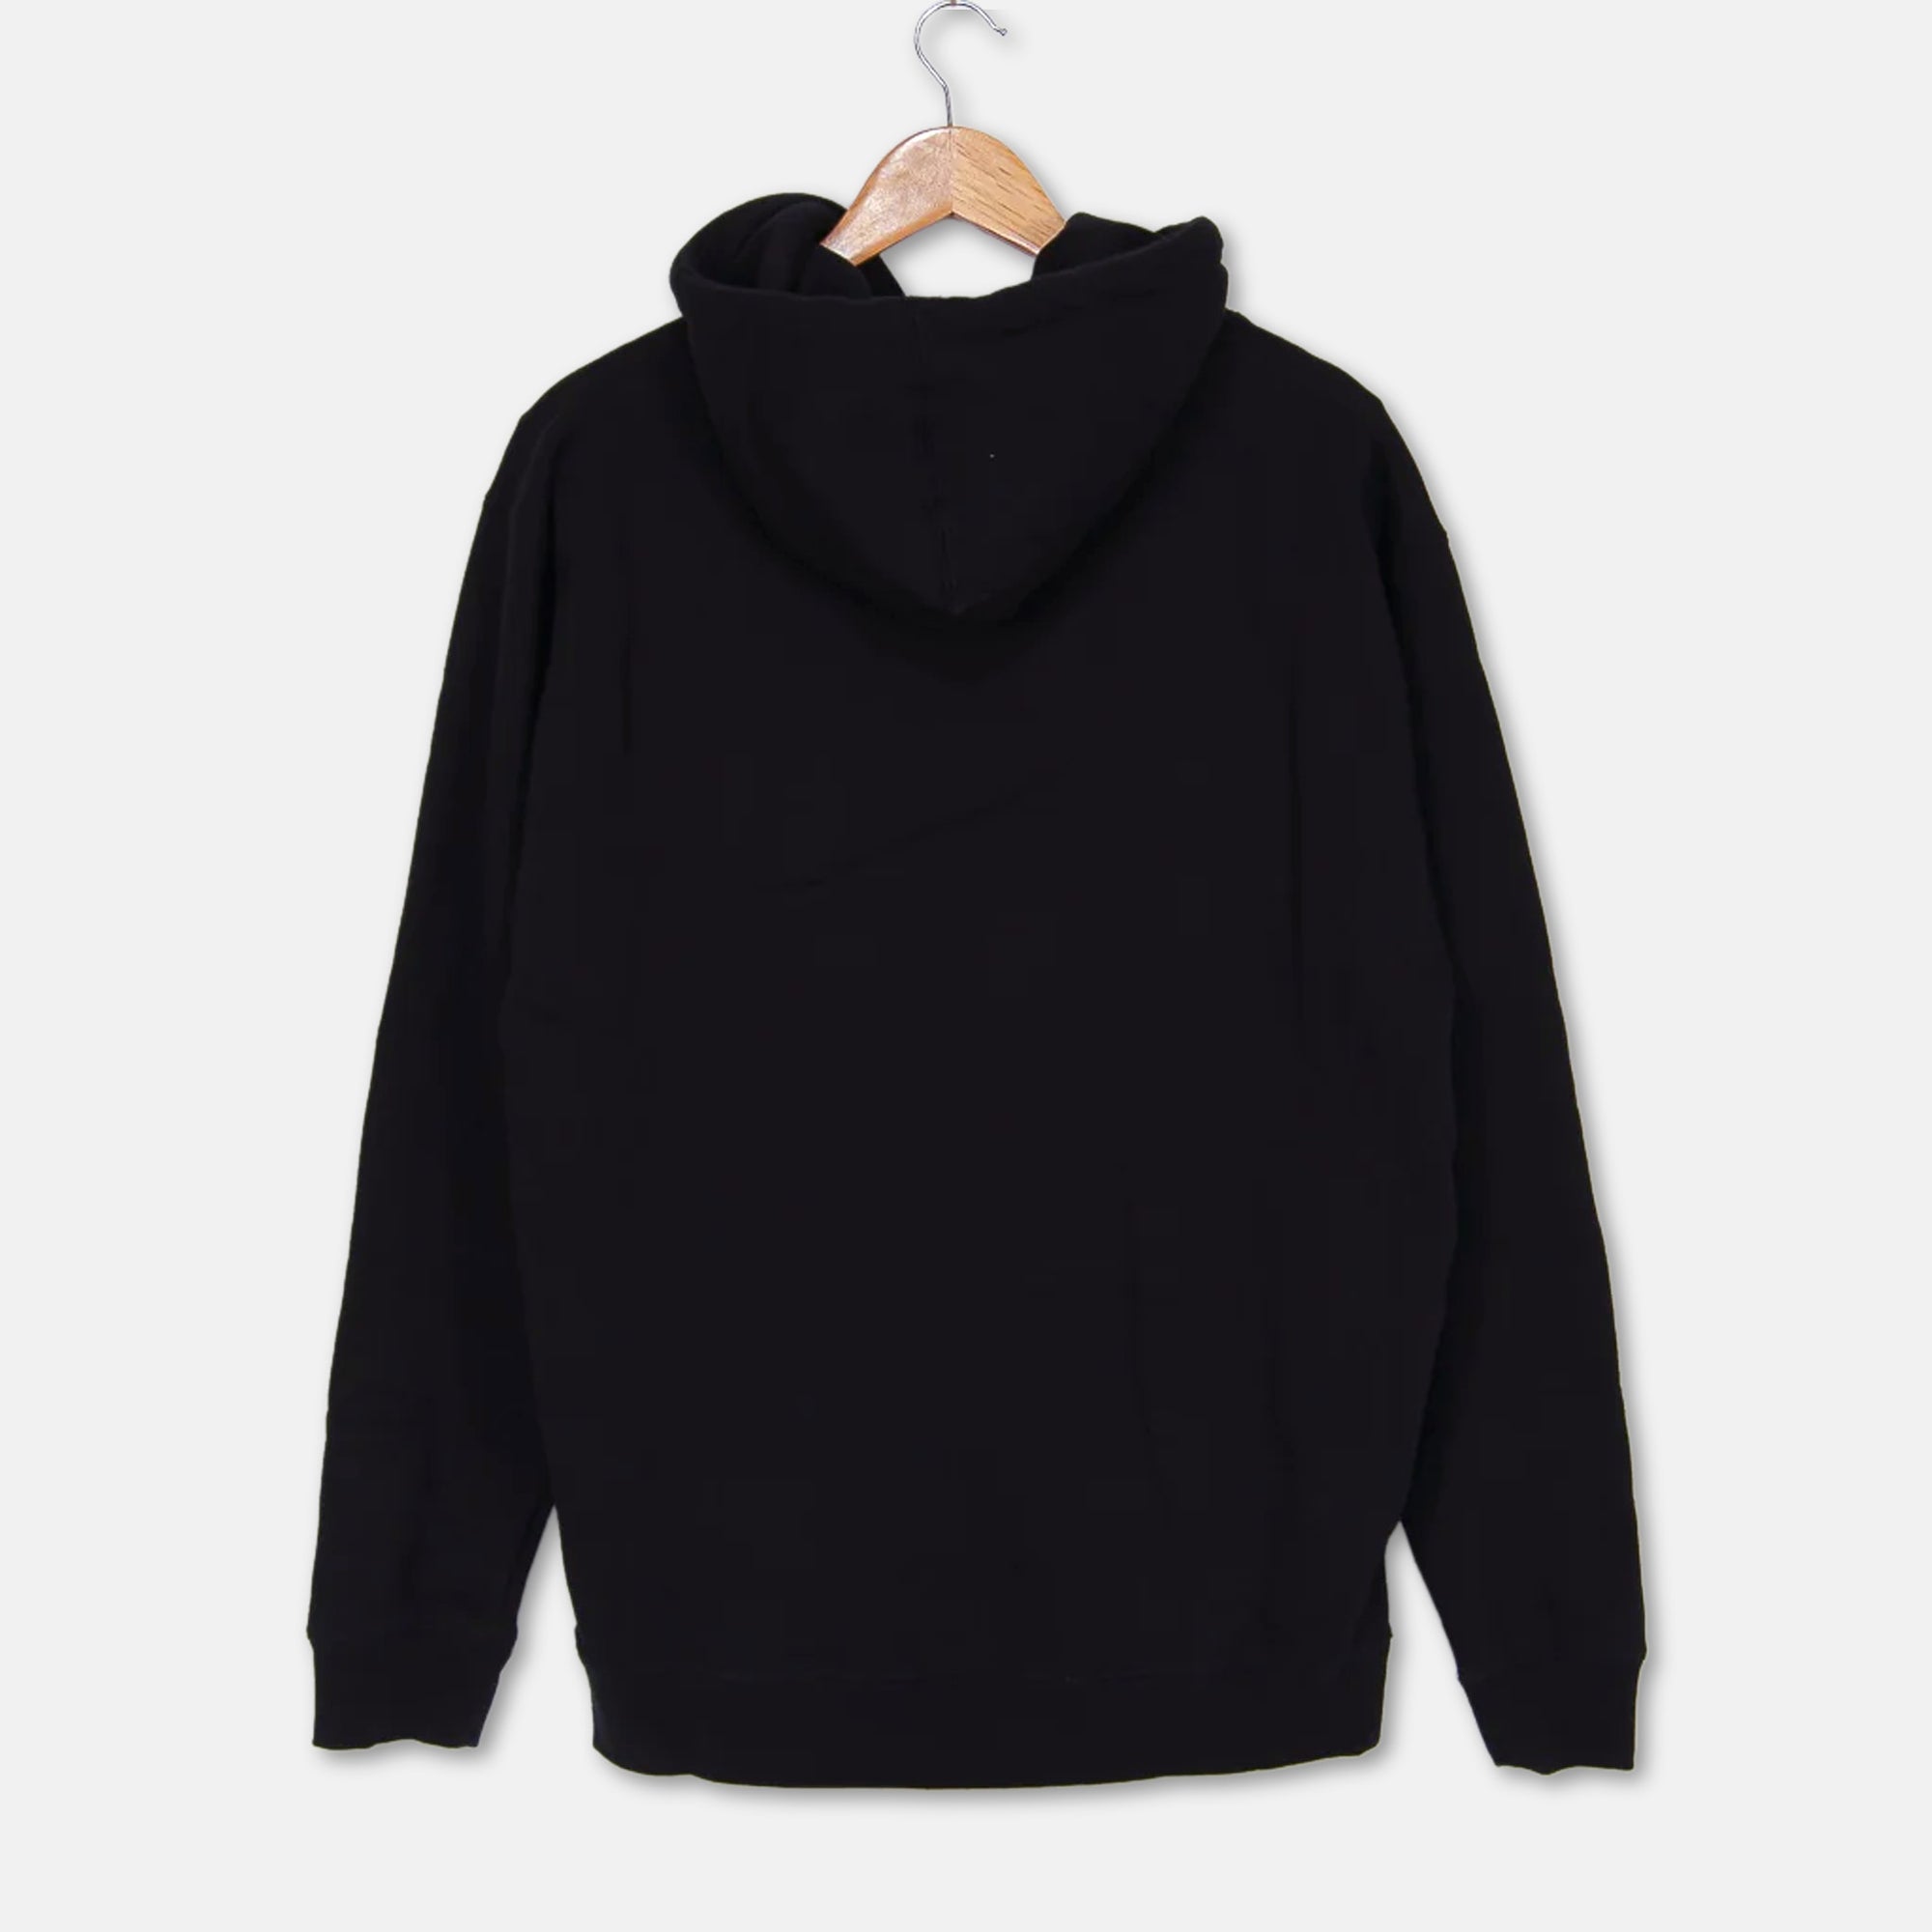 Pass Port Skateboards - Inter Solid Pullover Hooded Sweatshirt - Black